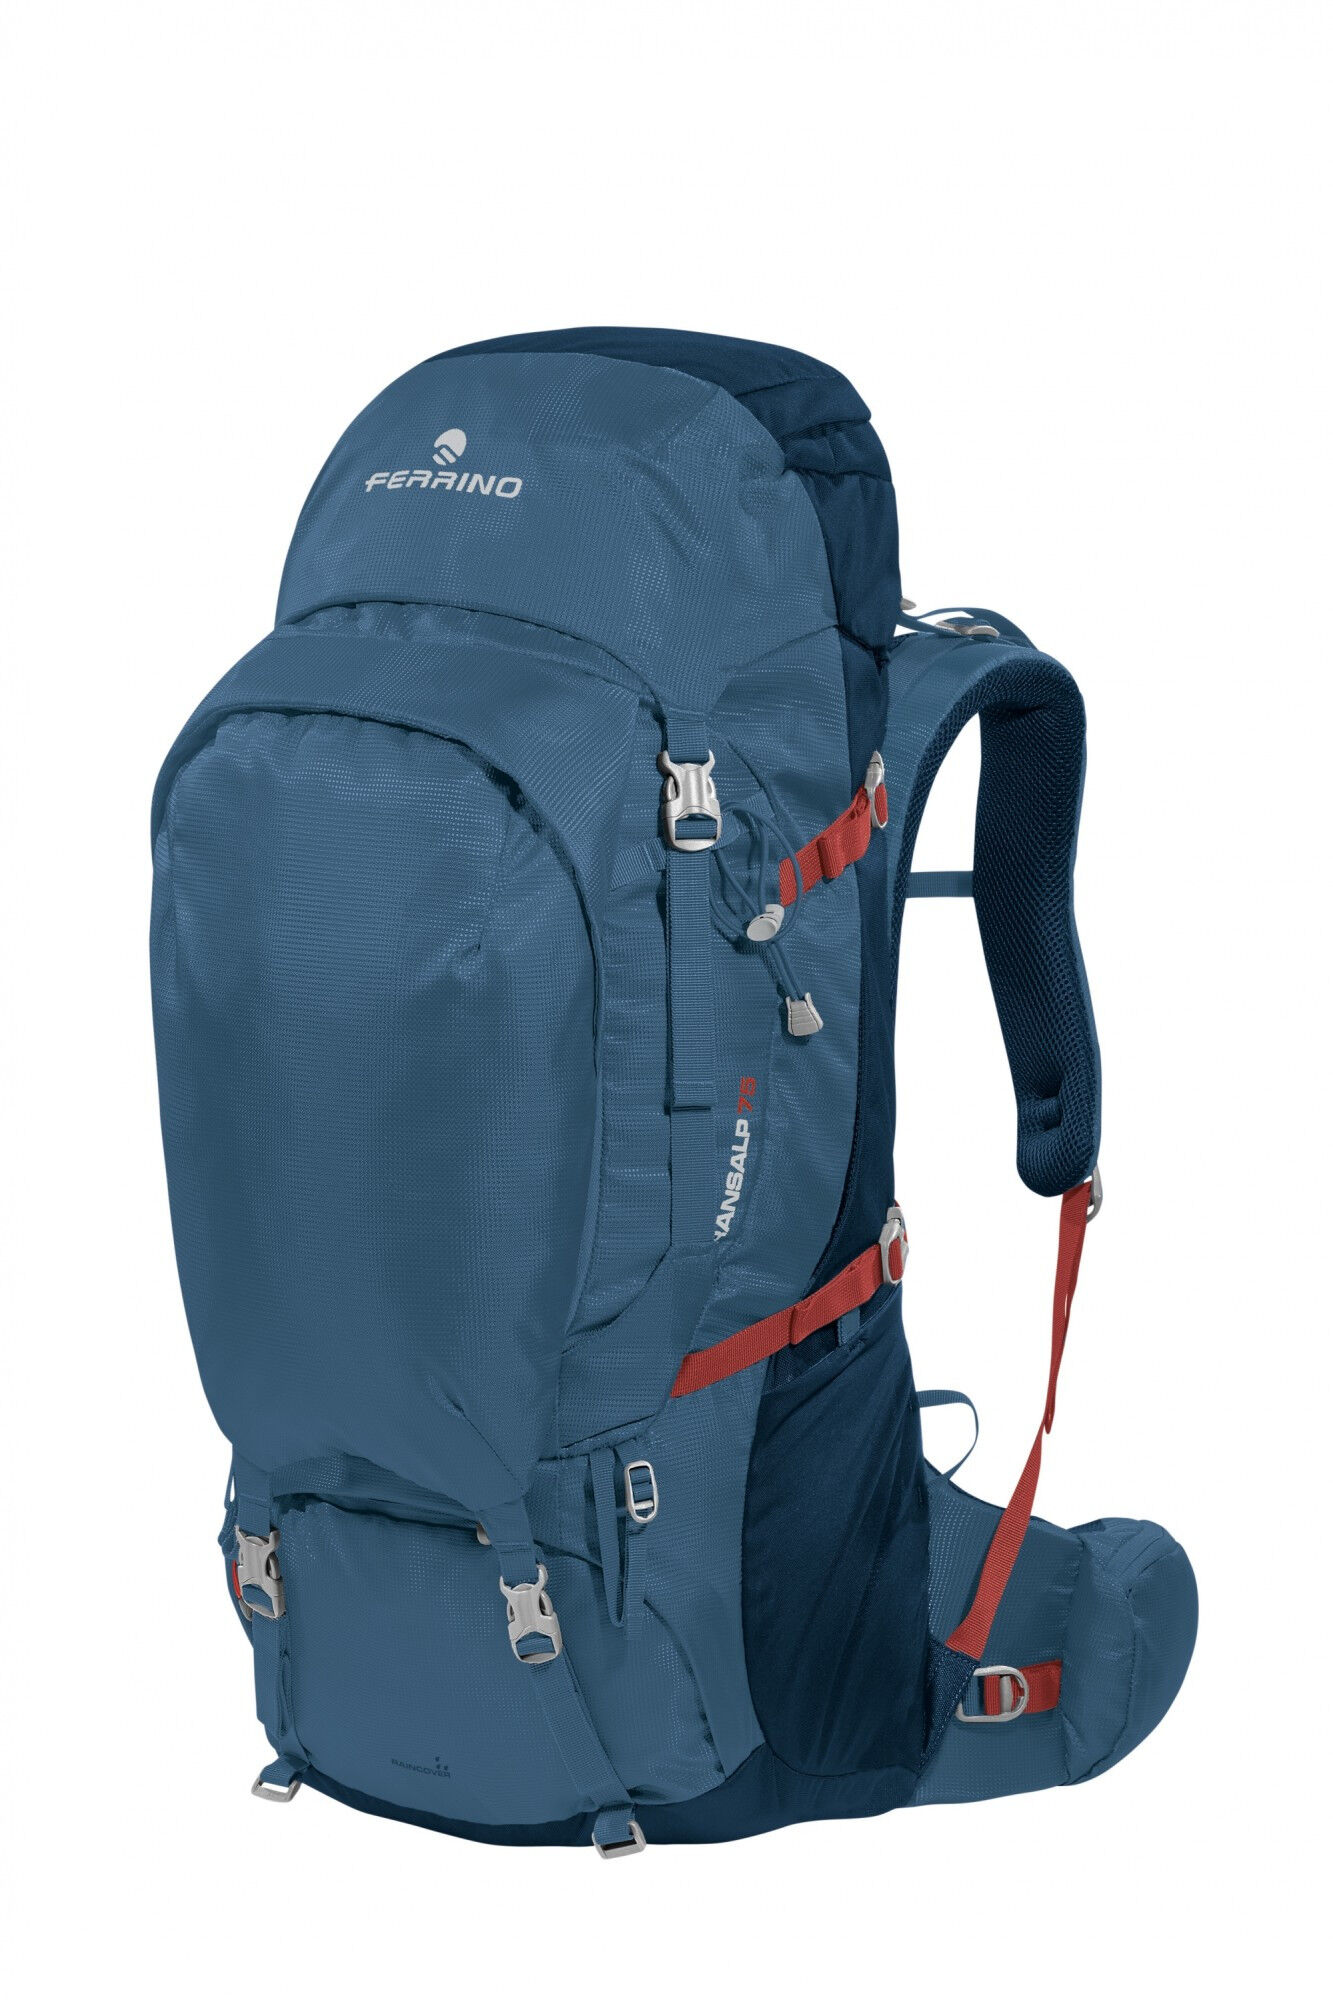 Ferrino Transalp 75 - Walking backpack